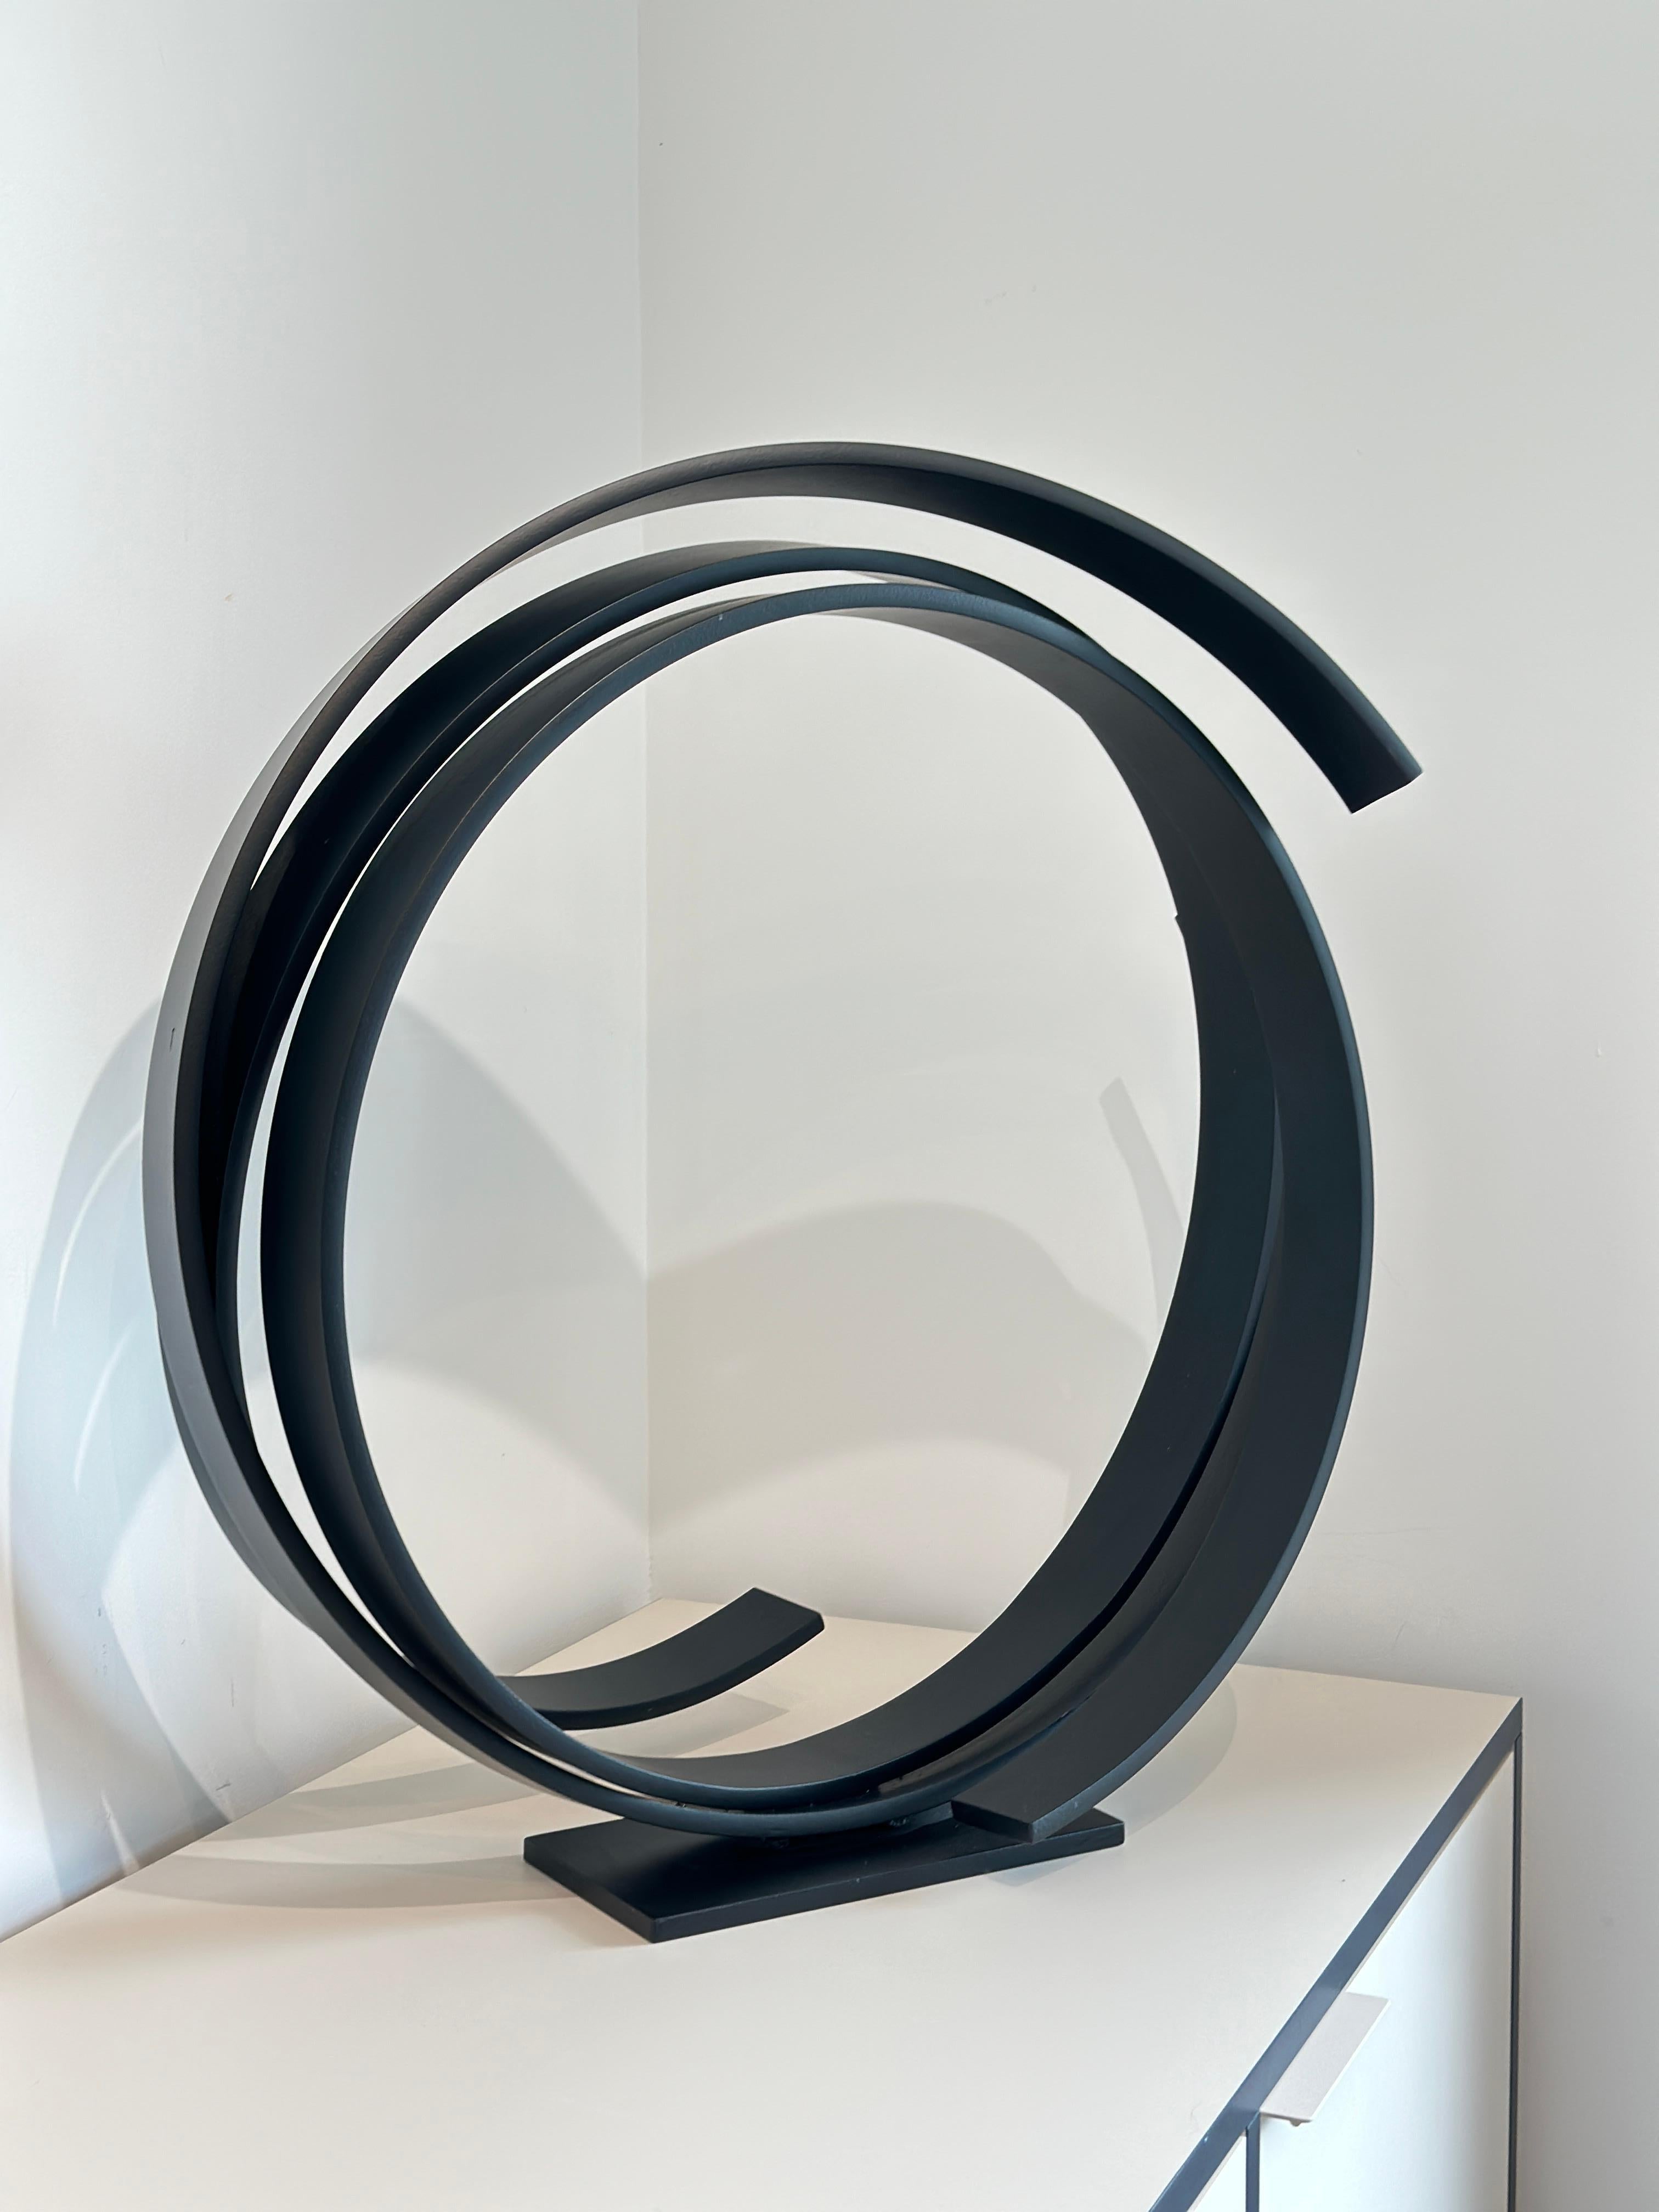 Black Orbit by Kuno Vollet - Large Contemporary Round Orbit sculpture  For Sale 12